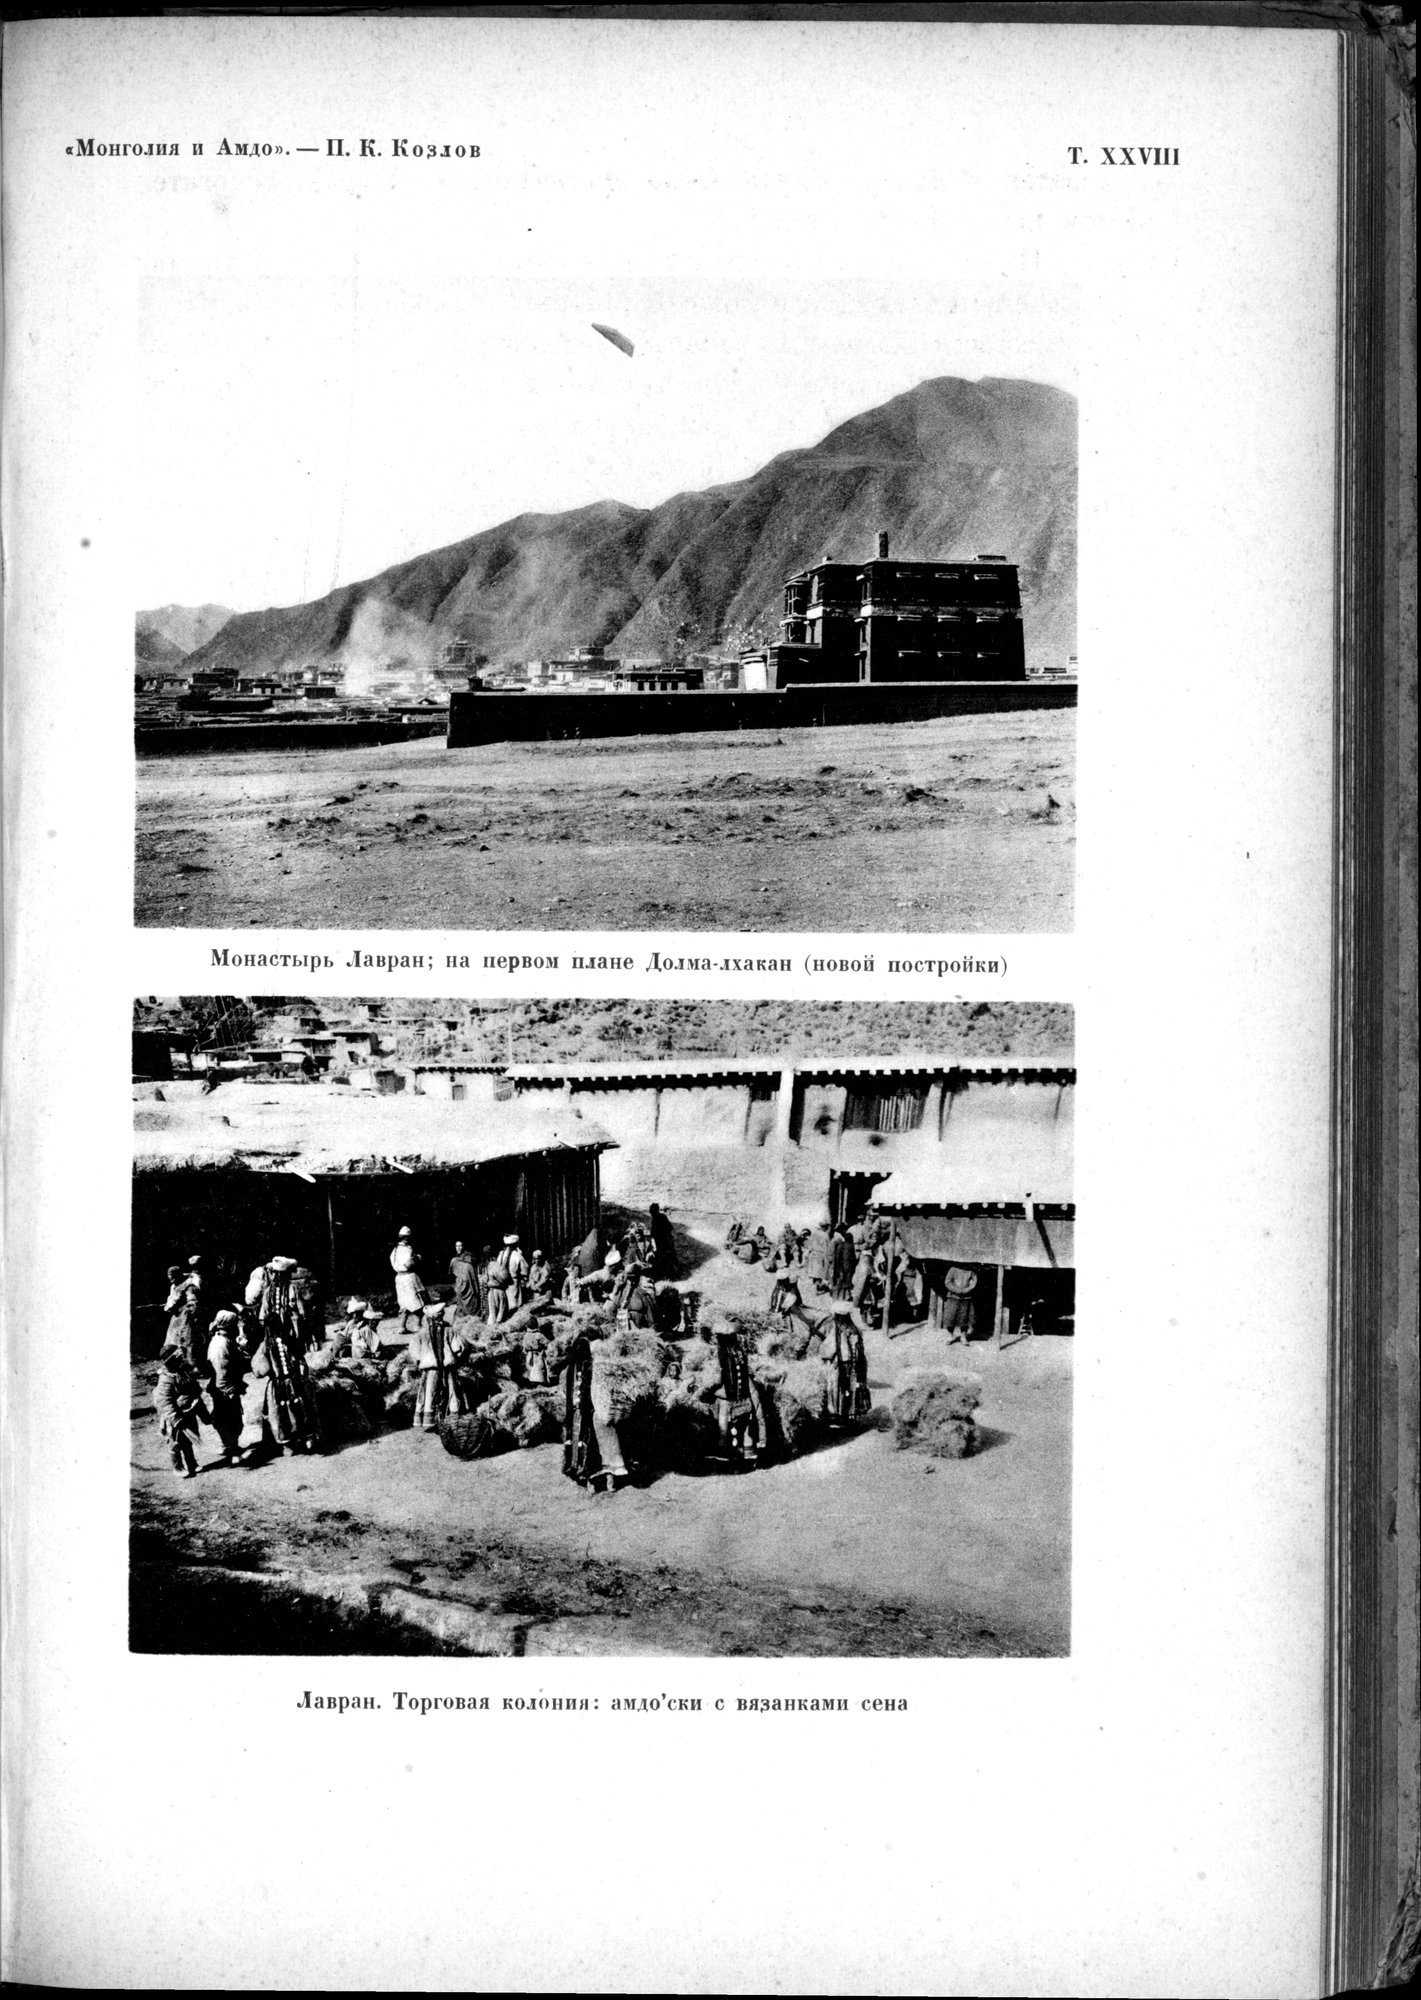 Mongoliya i Amdo i mertby gorod Khara-Khoto : vol.1 / Page 531 (Grayscale High Resolution Image)